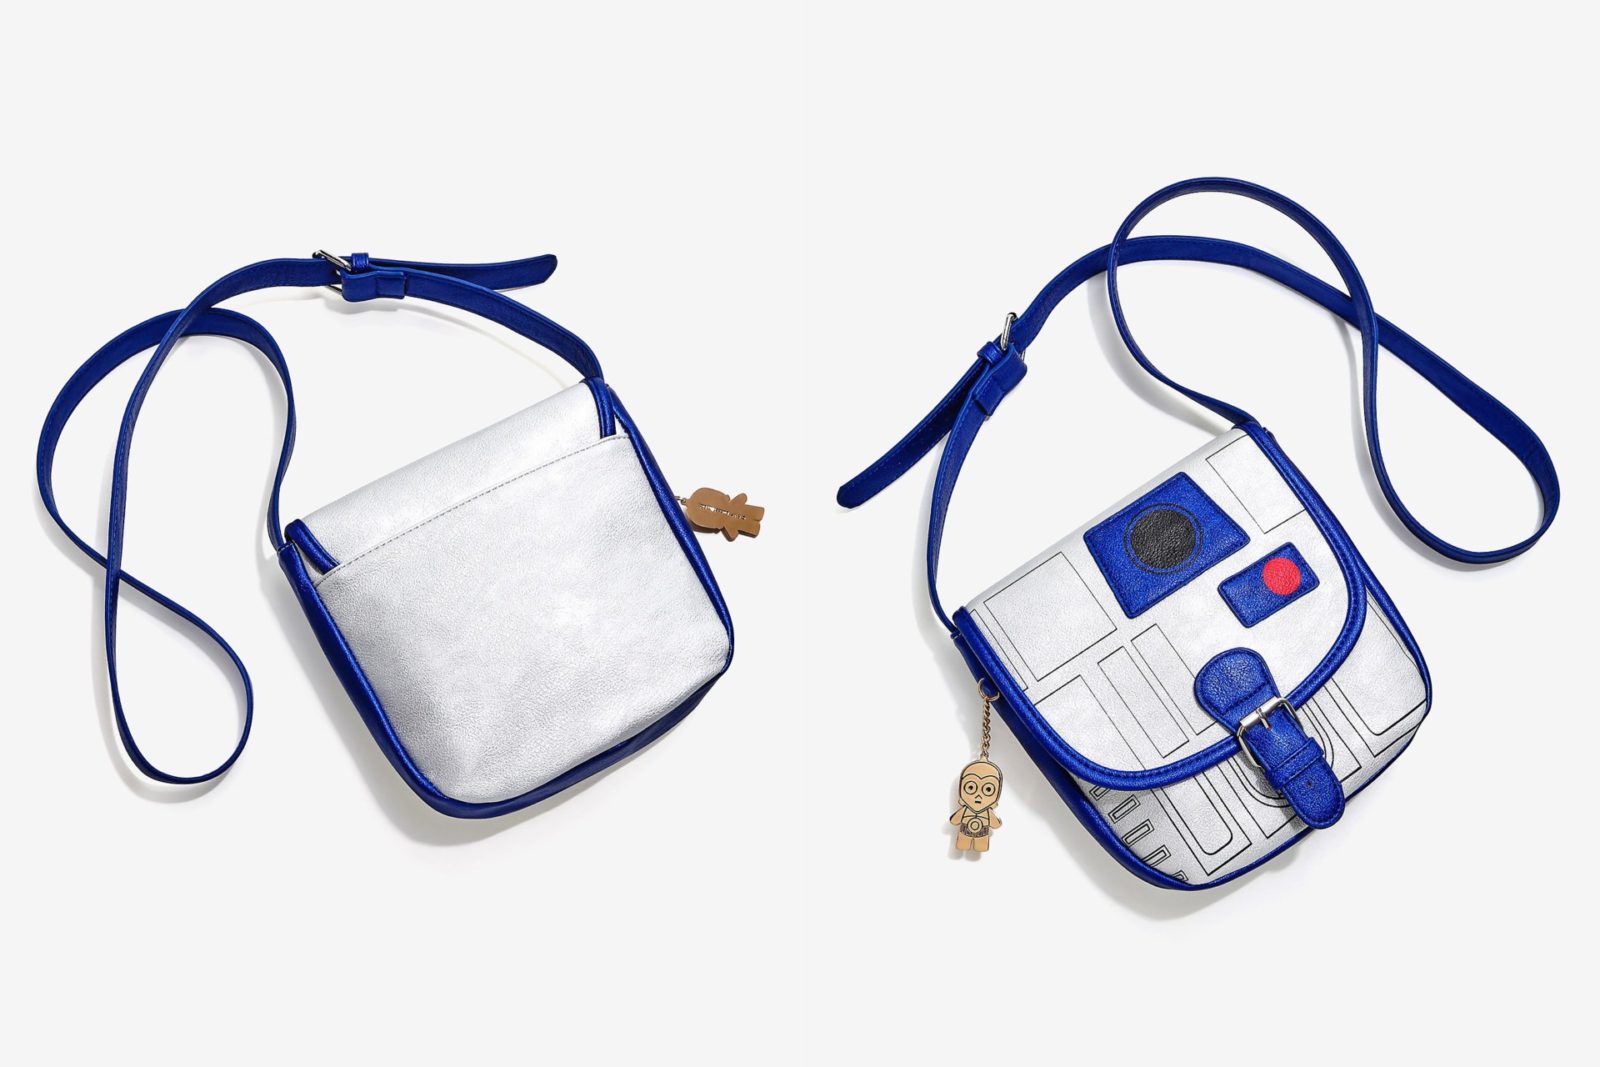 Box Lunch - Loungefly R2-d2 metallic mini saddle bag